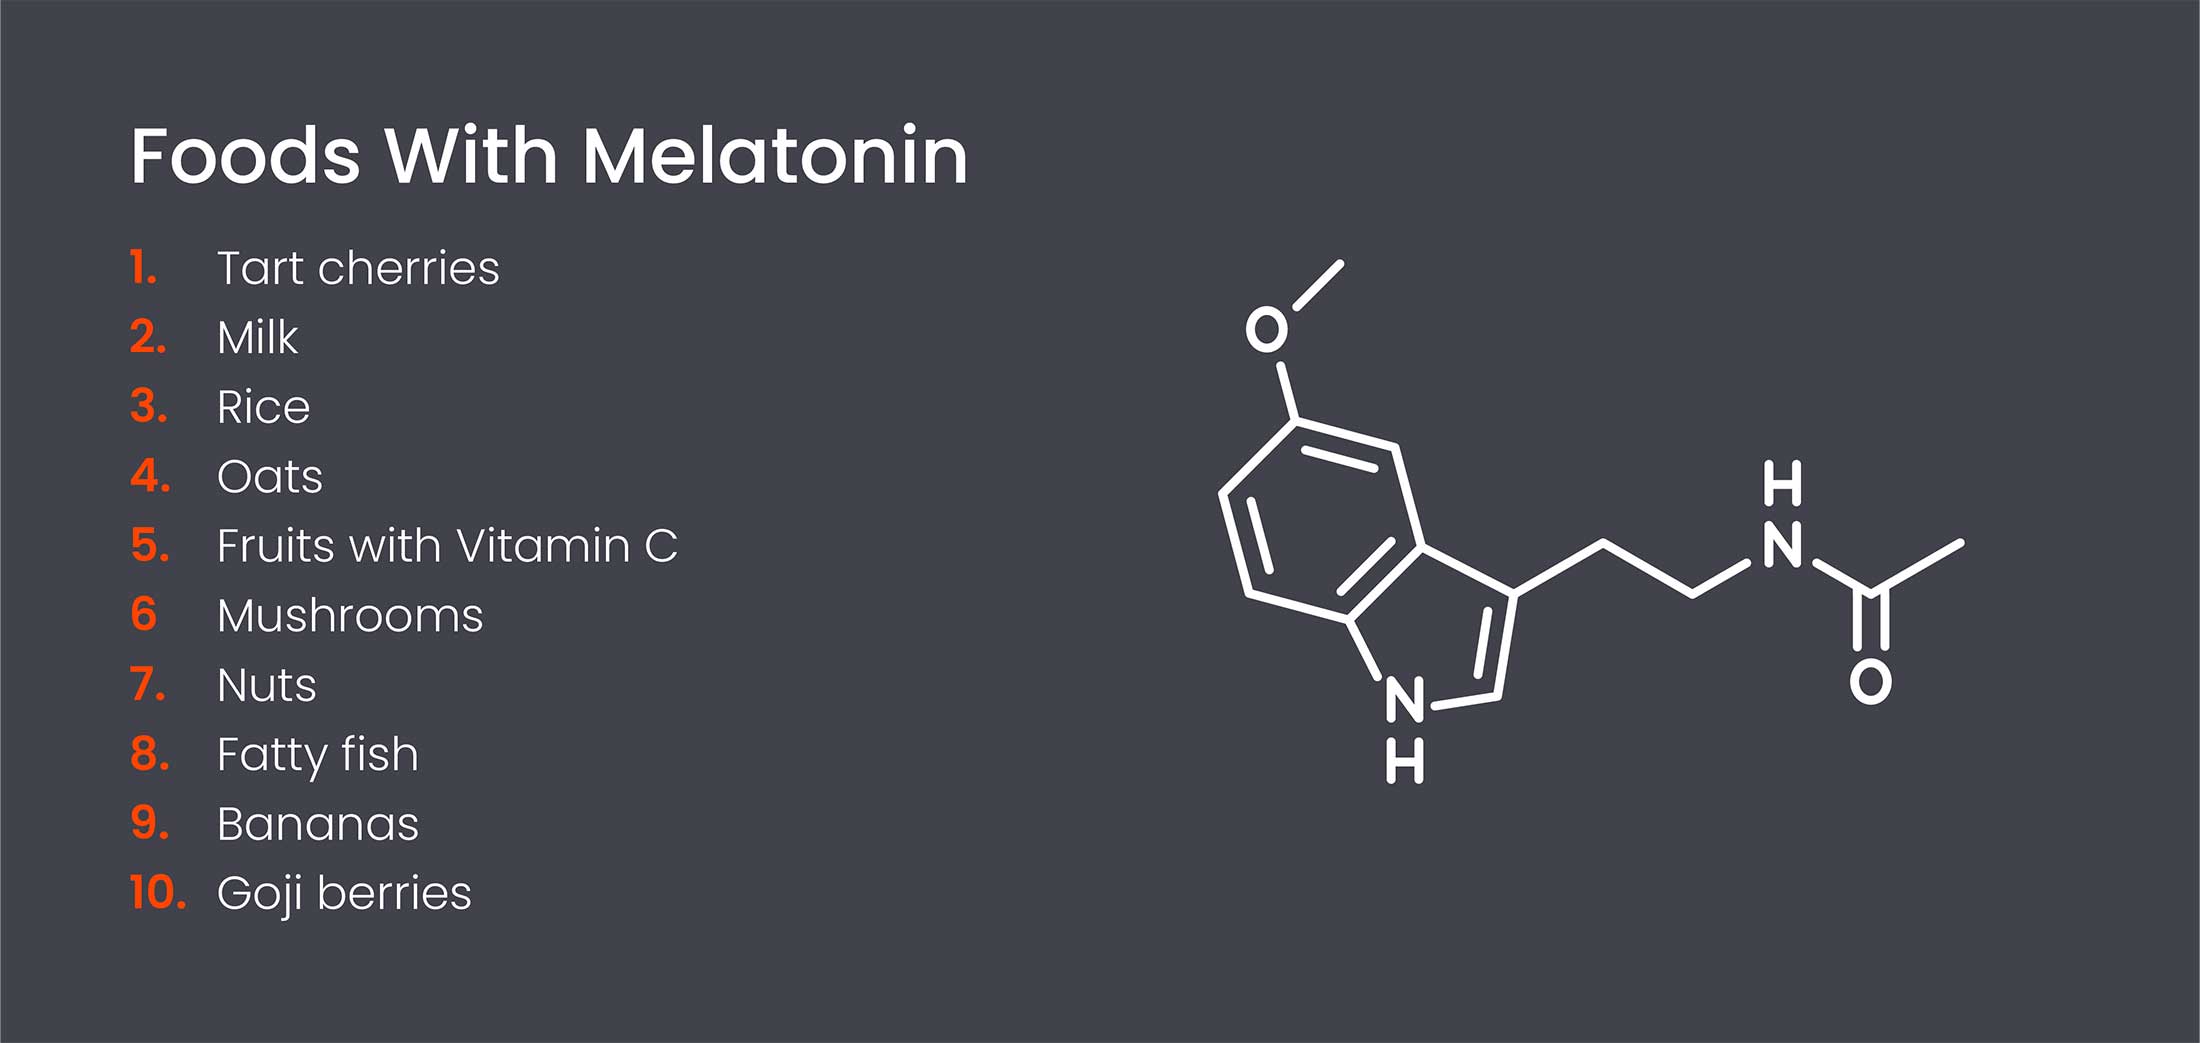 Foods with melatonin